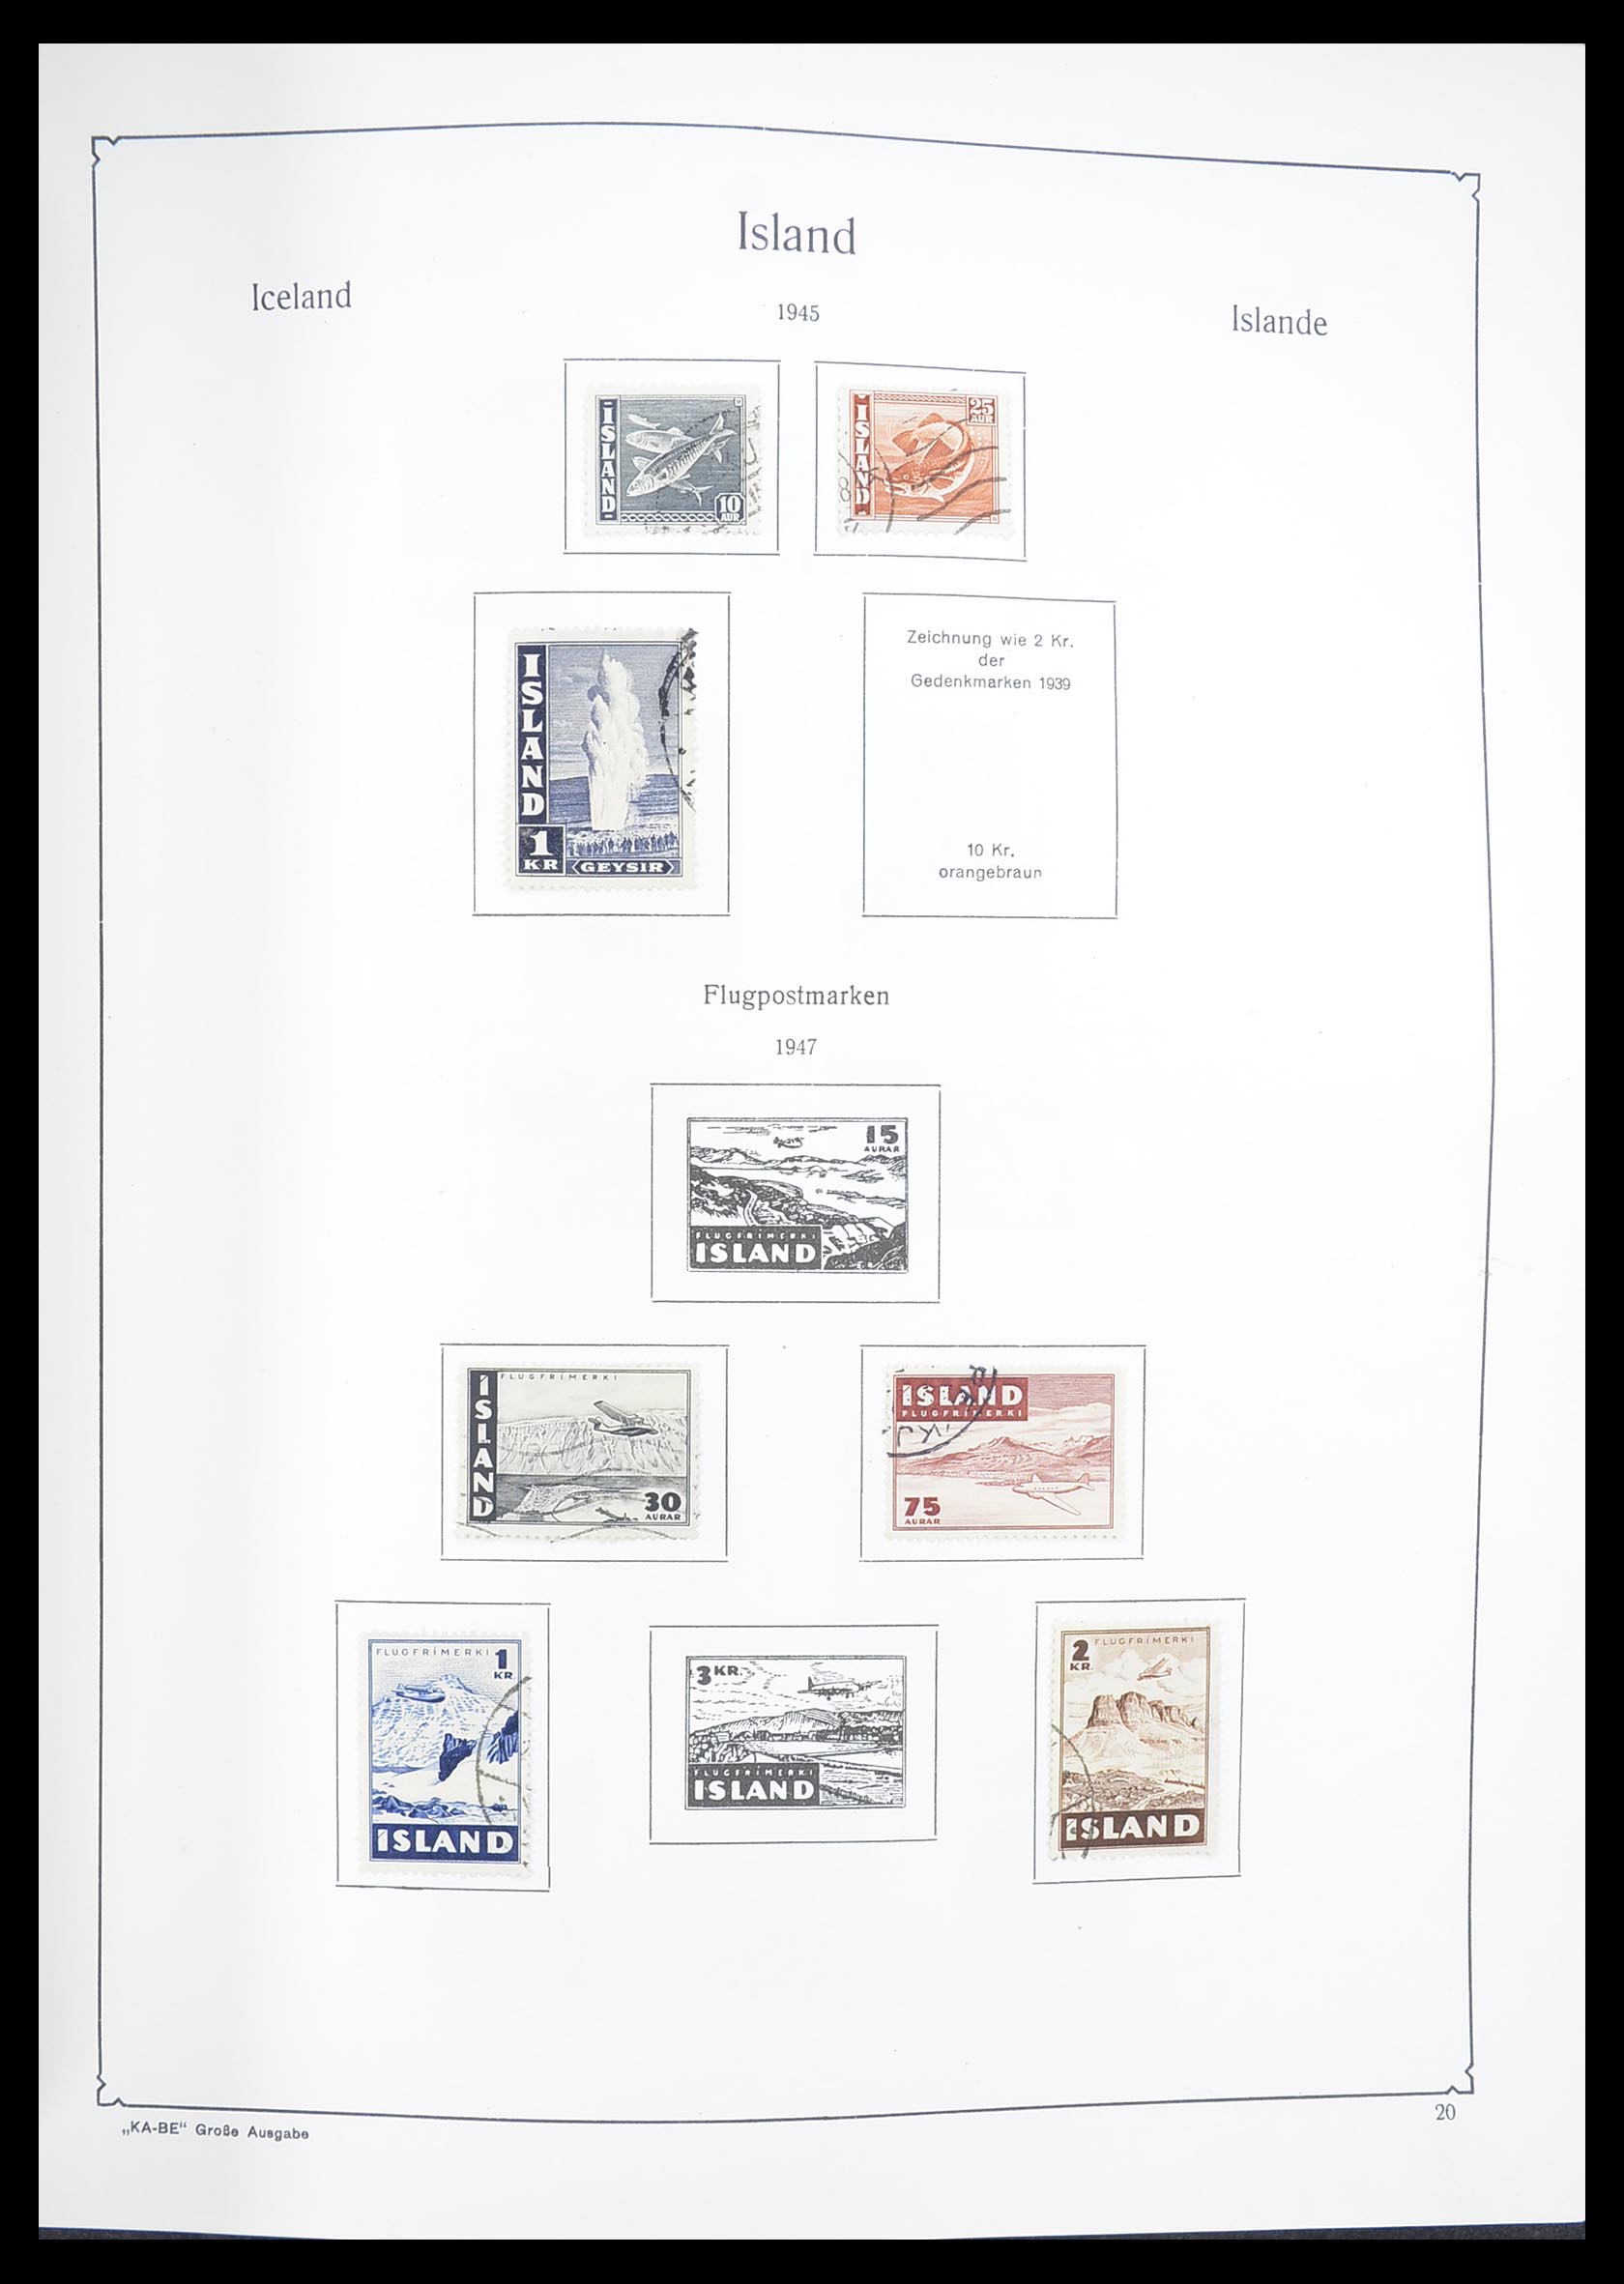 33379 076 - Stamp collection 33379 Scandinavia 1856-1972.